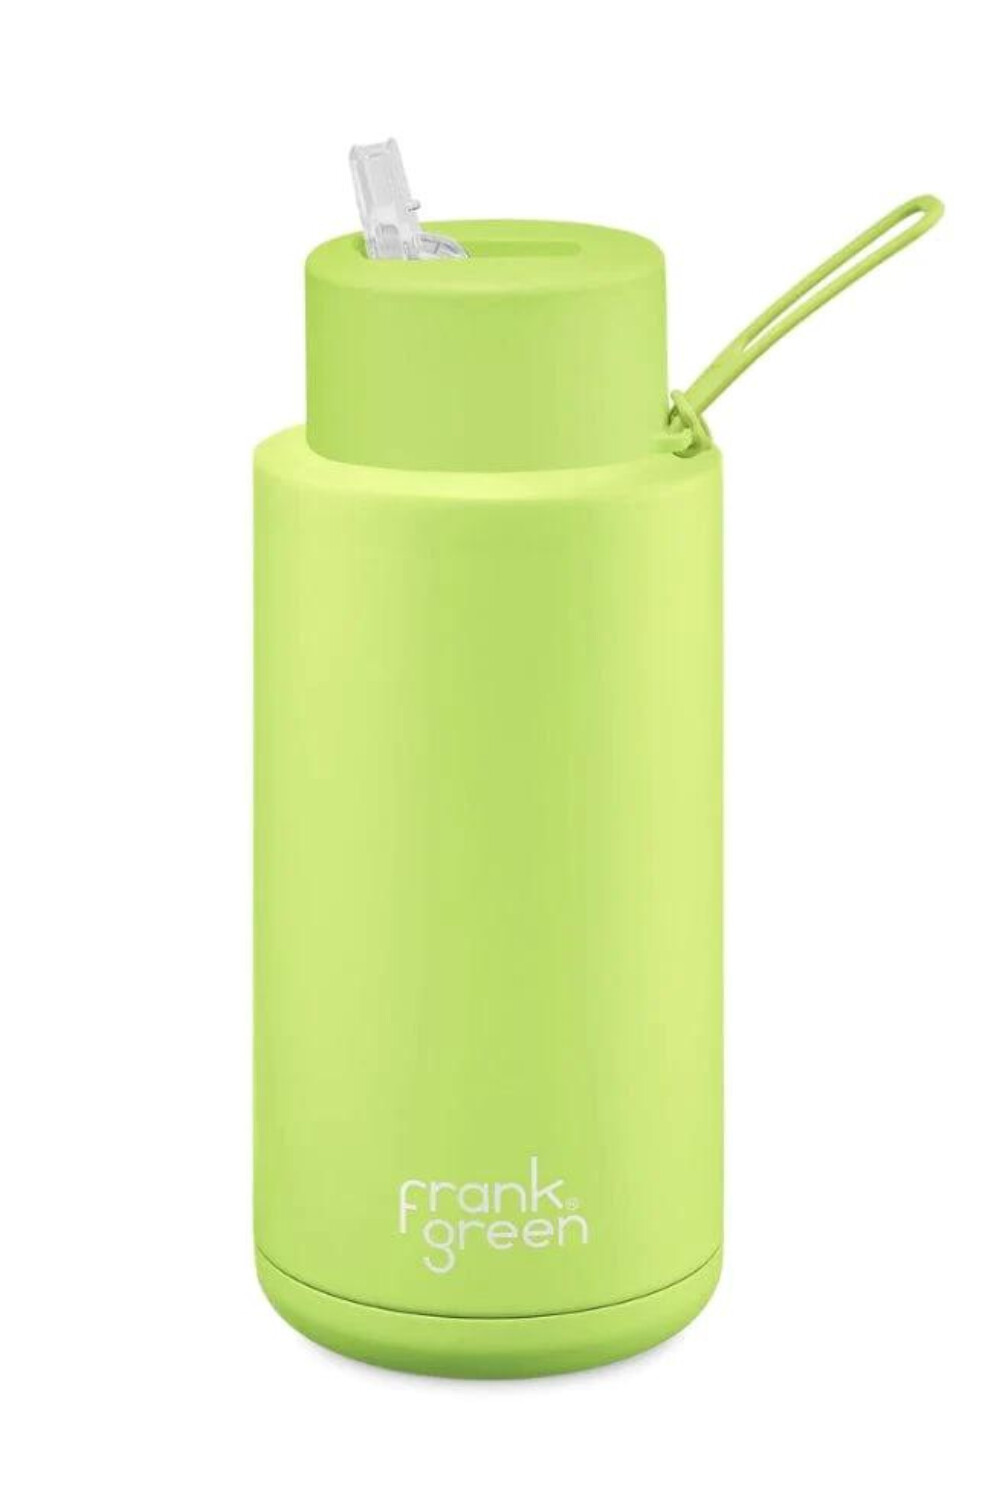 Frank Green Limited Edition Ceramic Reusable Bottle - 34oz / 1000mL - Pistachio Green